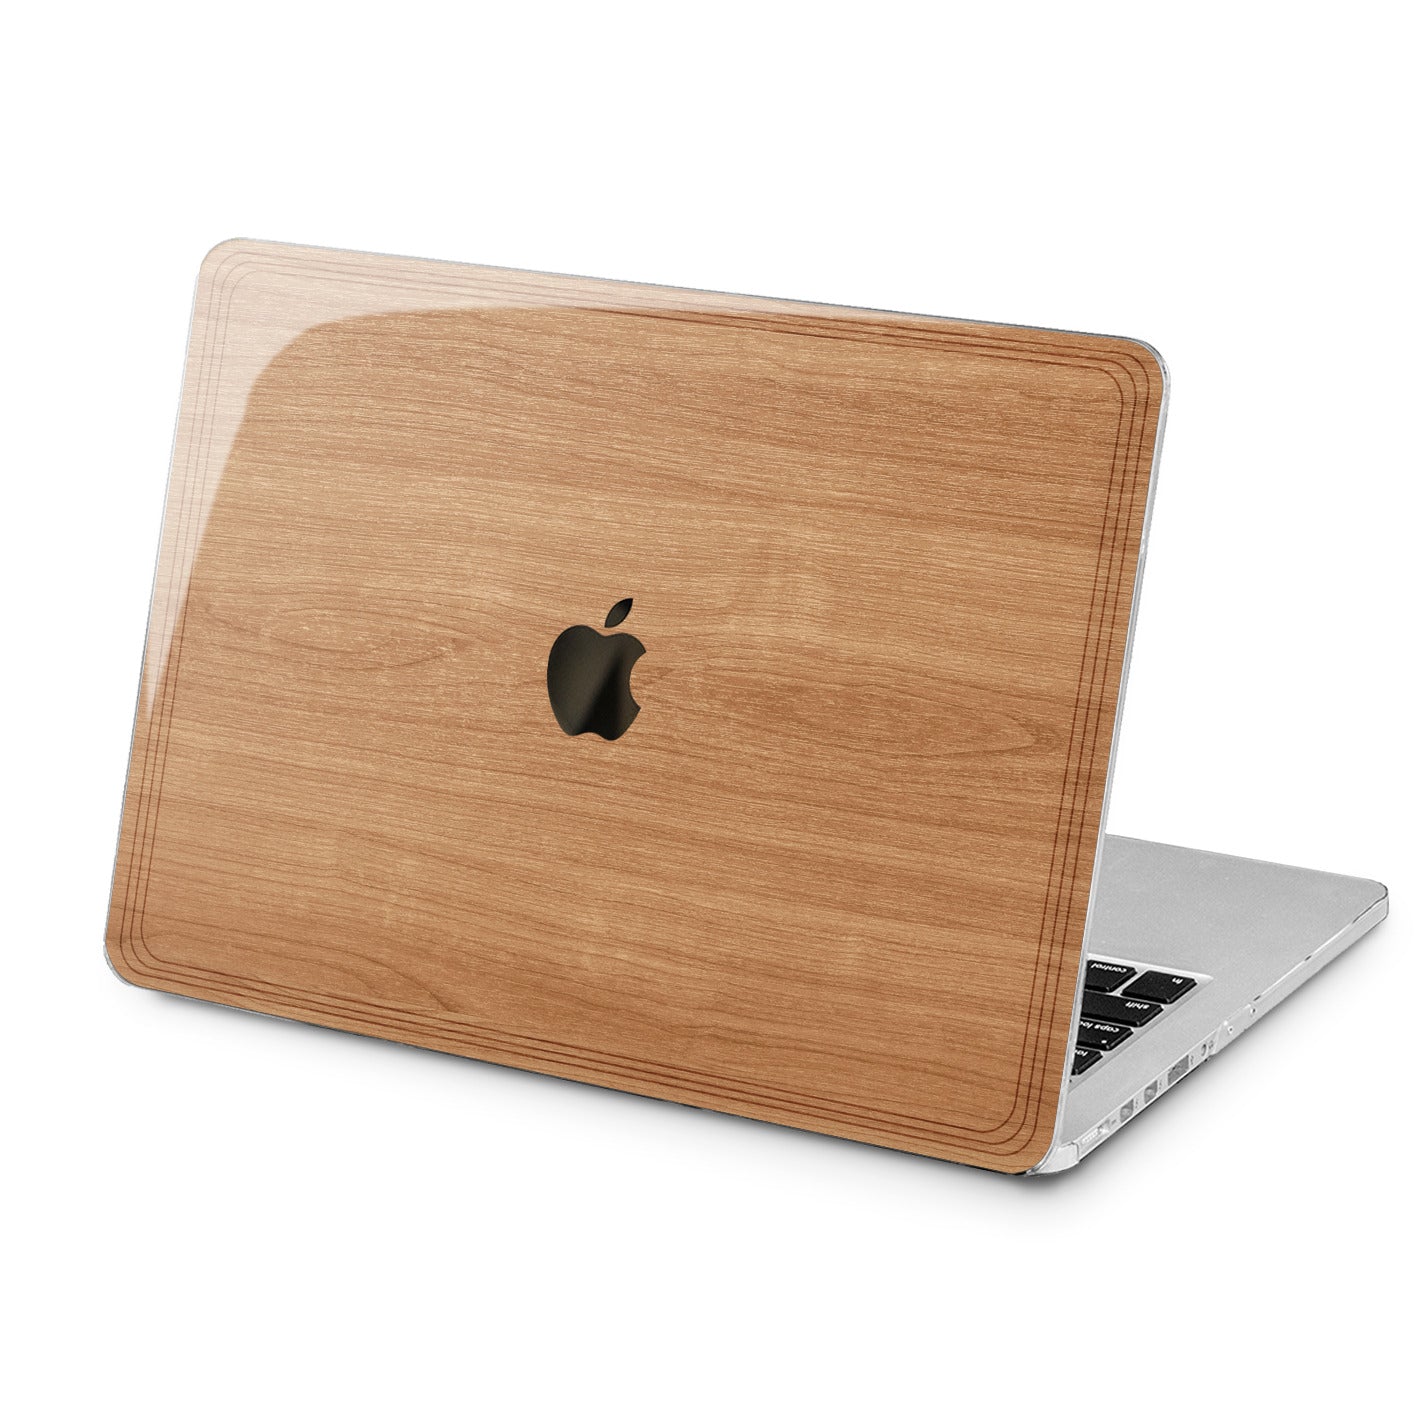 Lex Altern Lex Altern Basic Wood Case for your Laptop Apple Macbook.